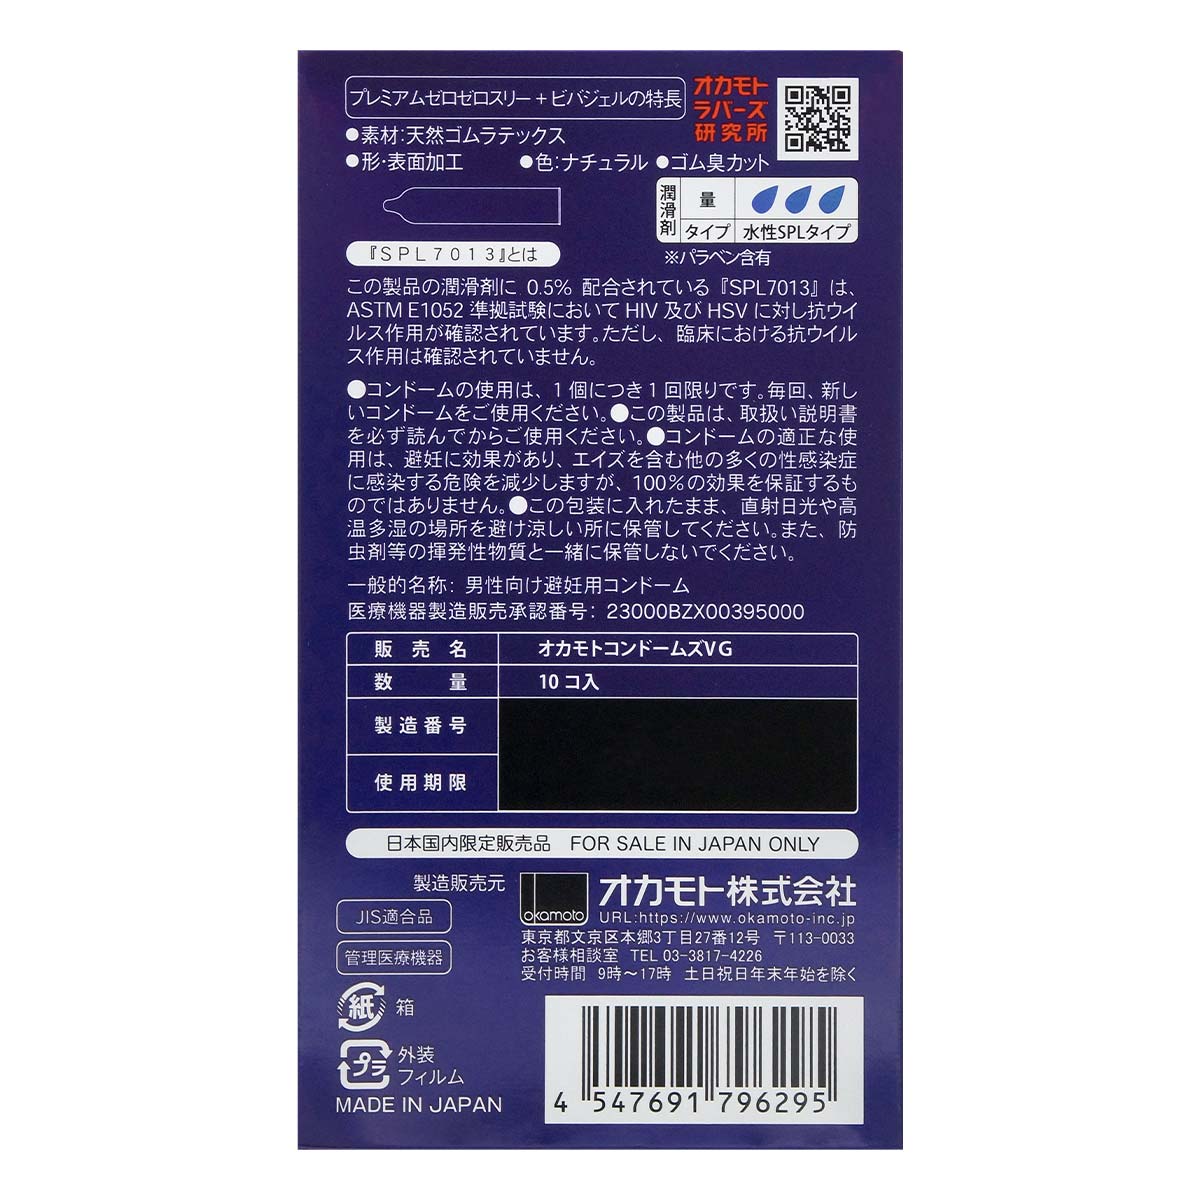 Zero Zero Three 0.03 Vivagel (Japan Edition) 10's Pack Latex Condom-p_3